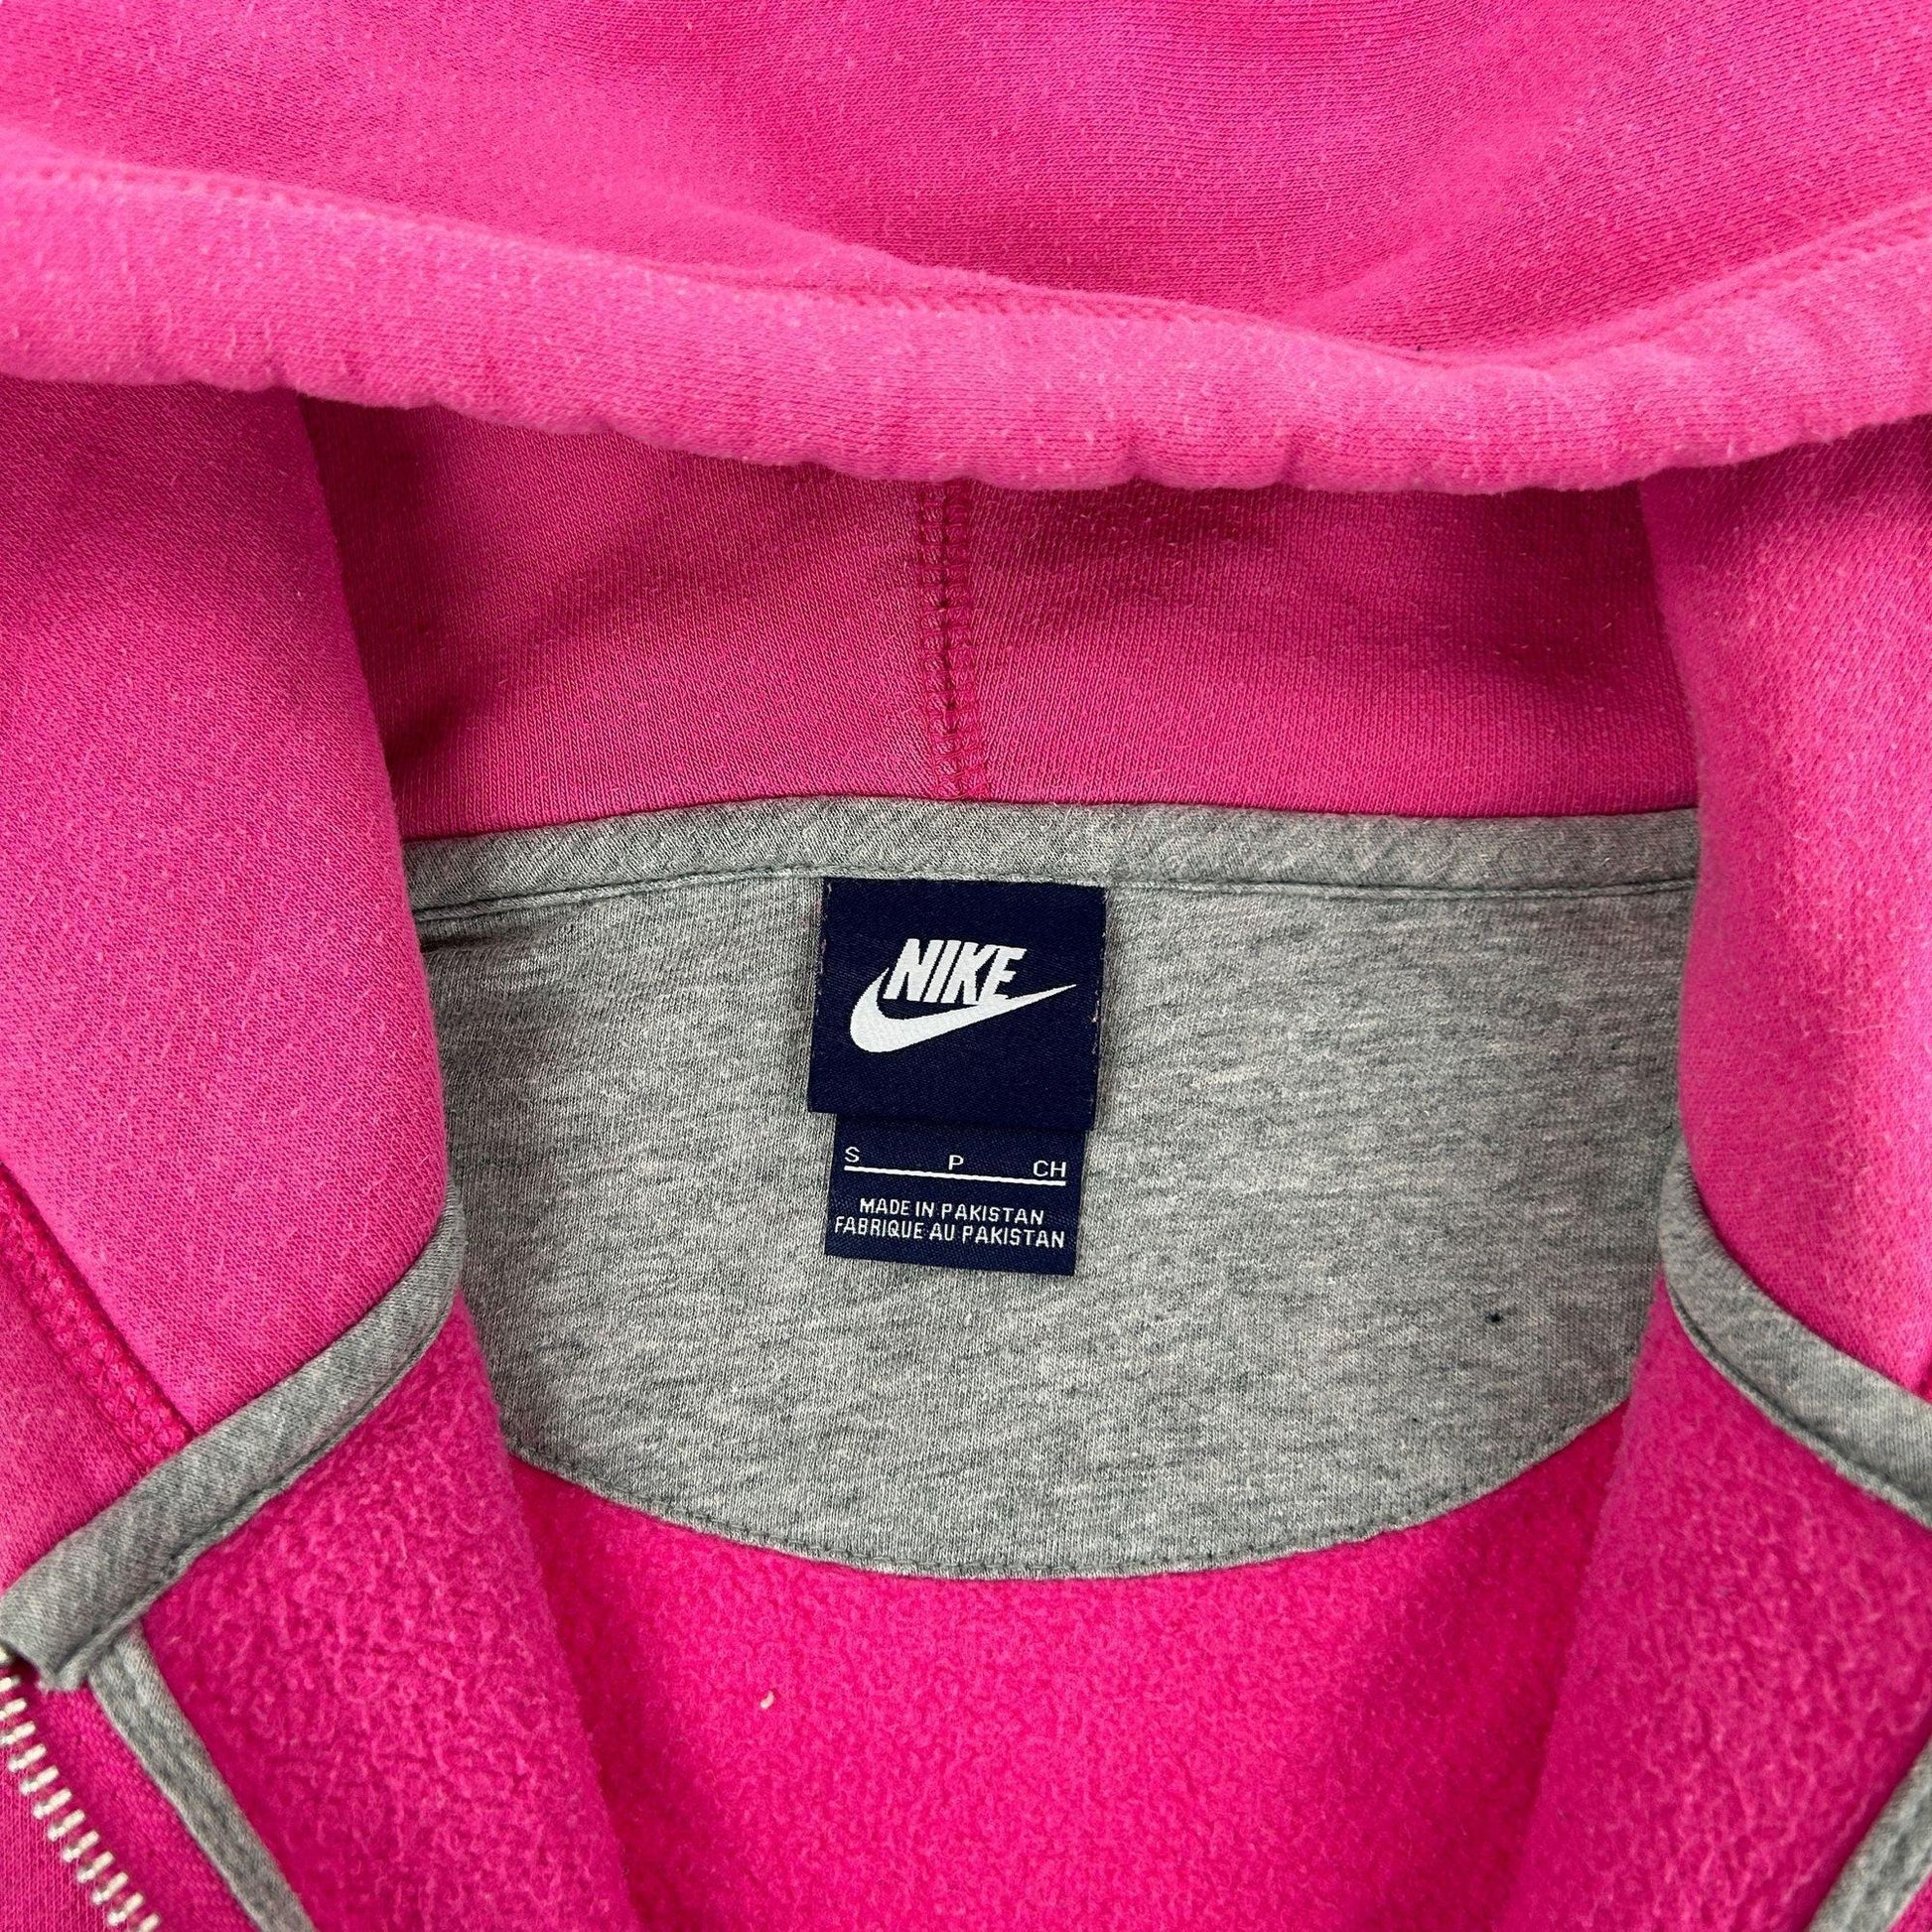 Vintage Nike Zip Up Hoodie Woman's Size S - Known Source